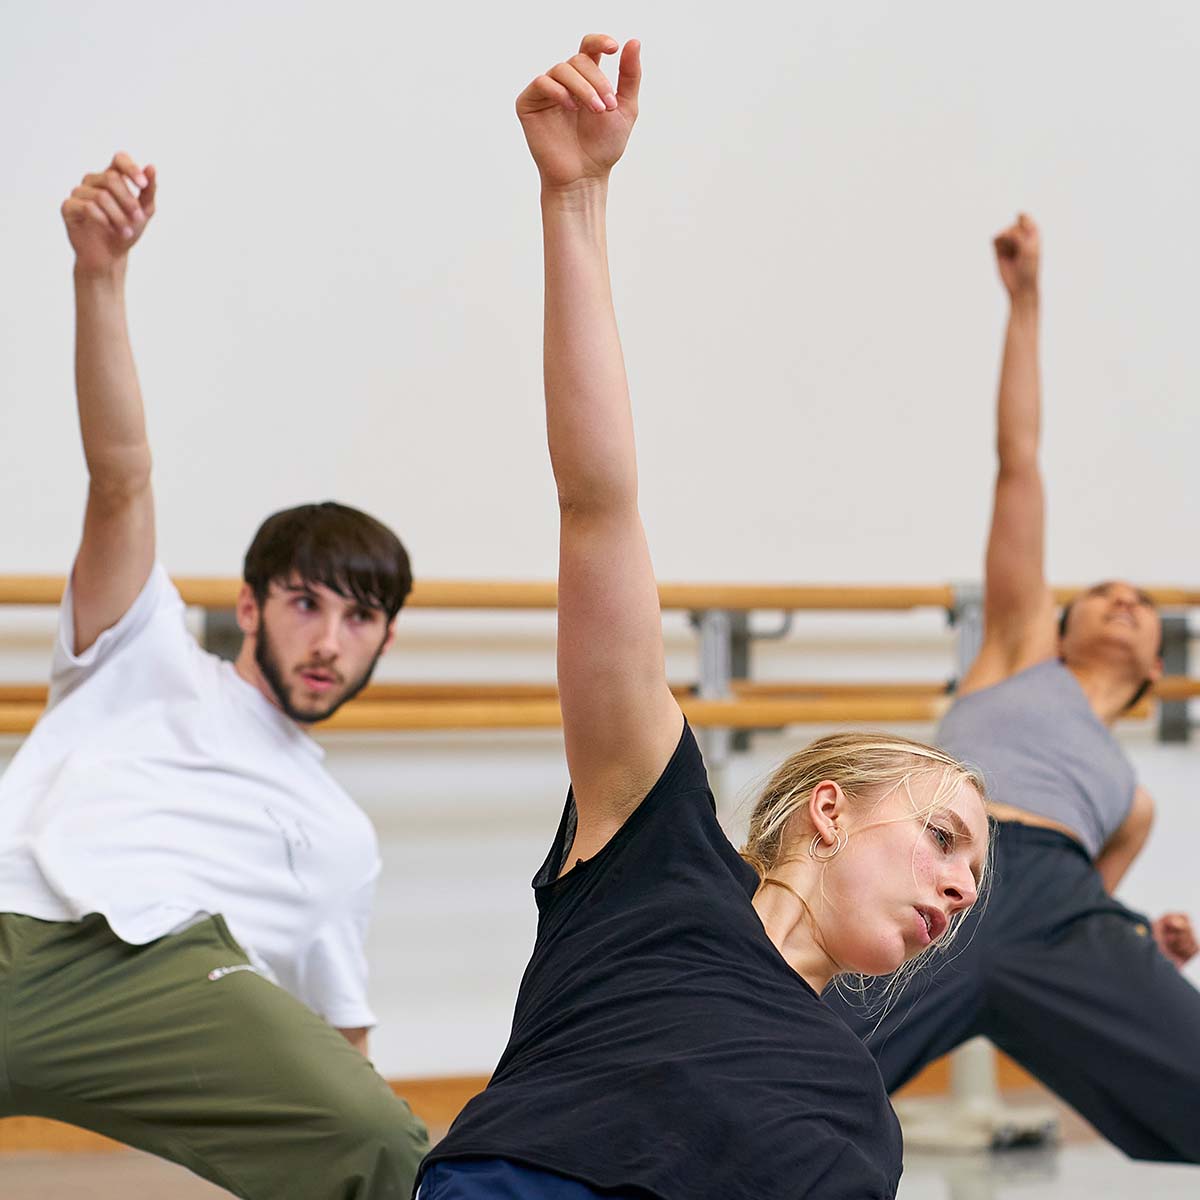 3 dancers in class lean back, reaching up 